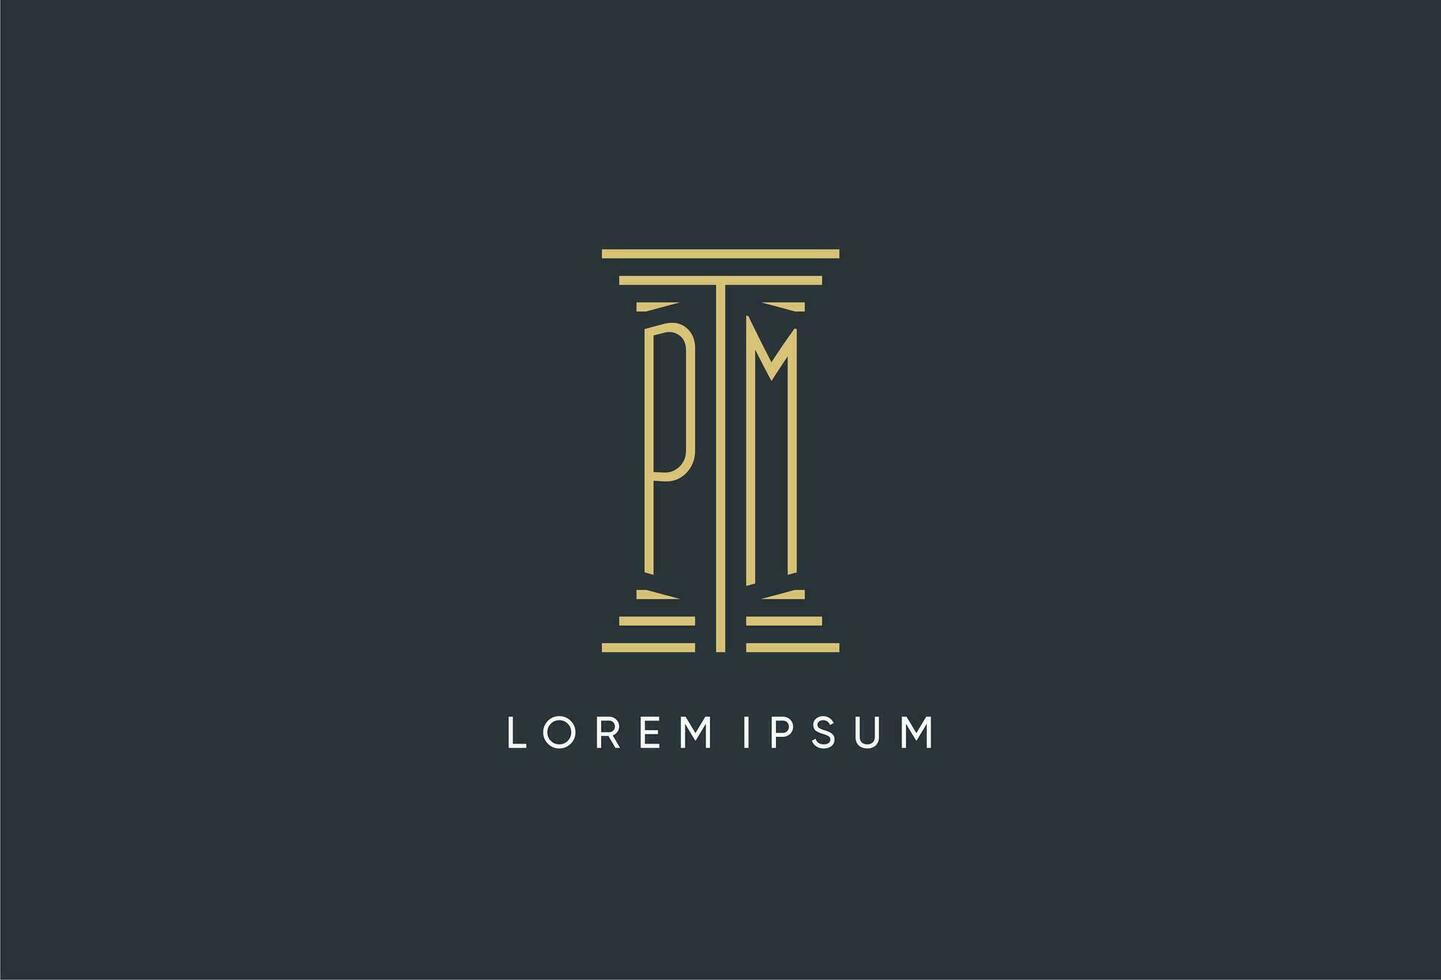 PM initial monogram with pillar shape logo design vector